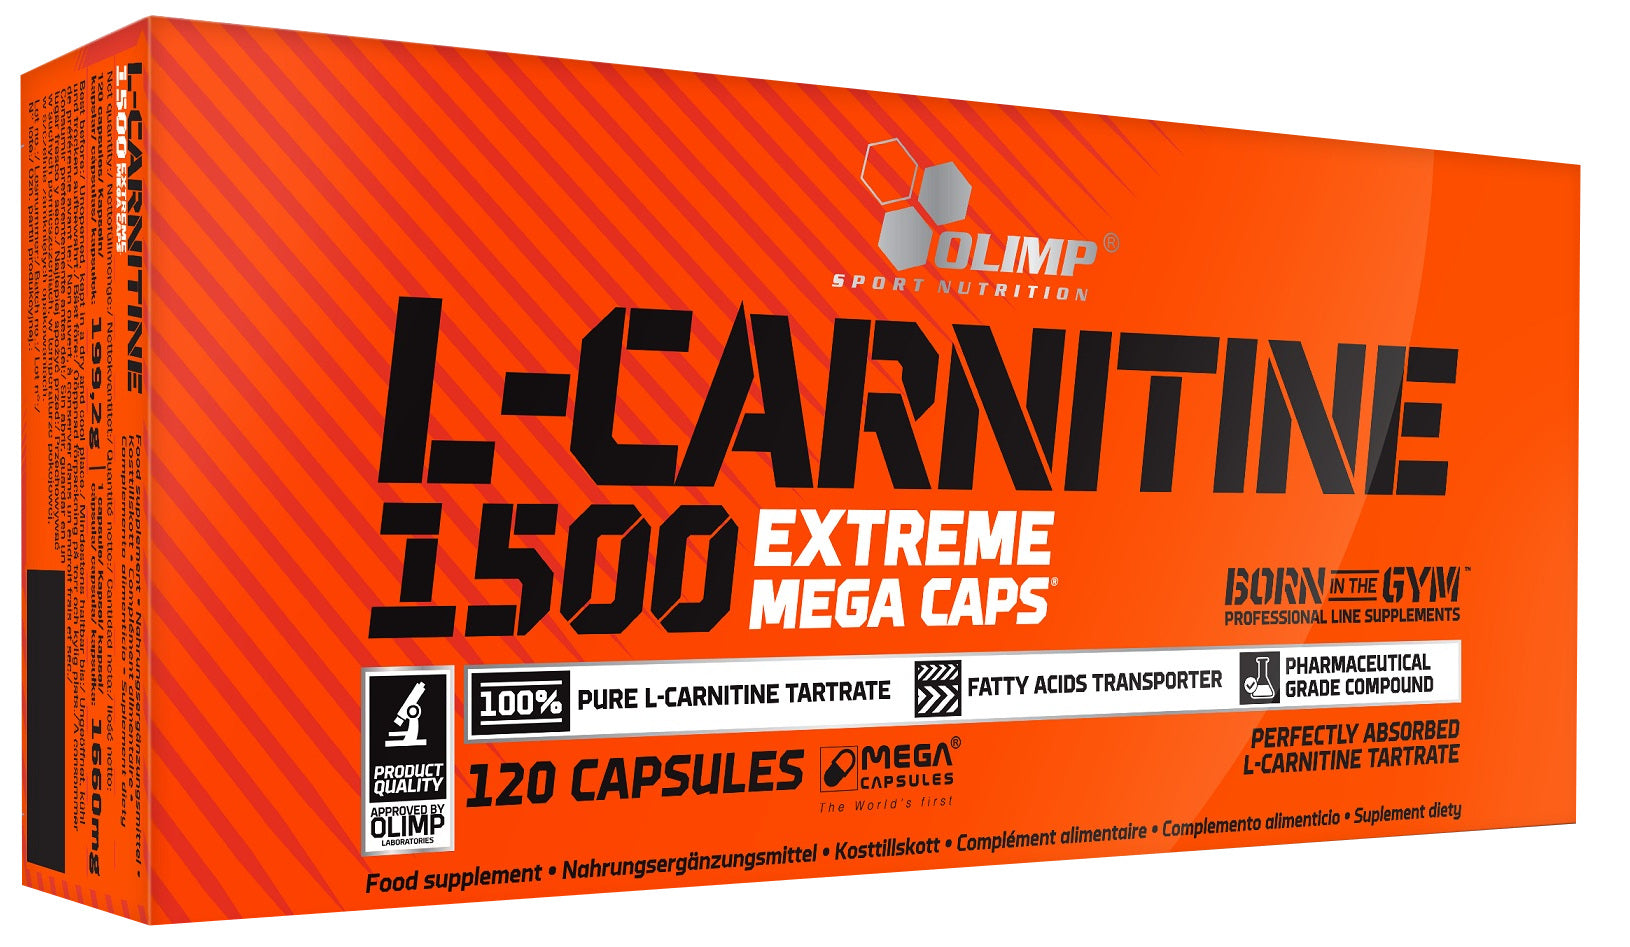 Olimp Nutrition L-Carnitine 1500 Extreme, 120 Capsules